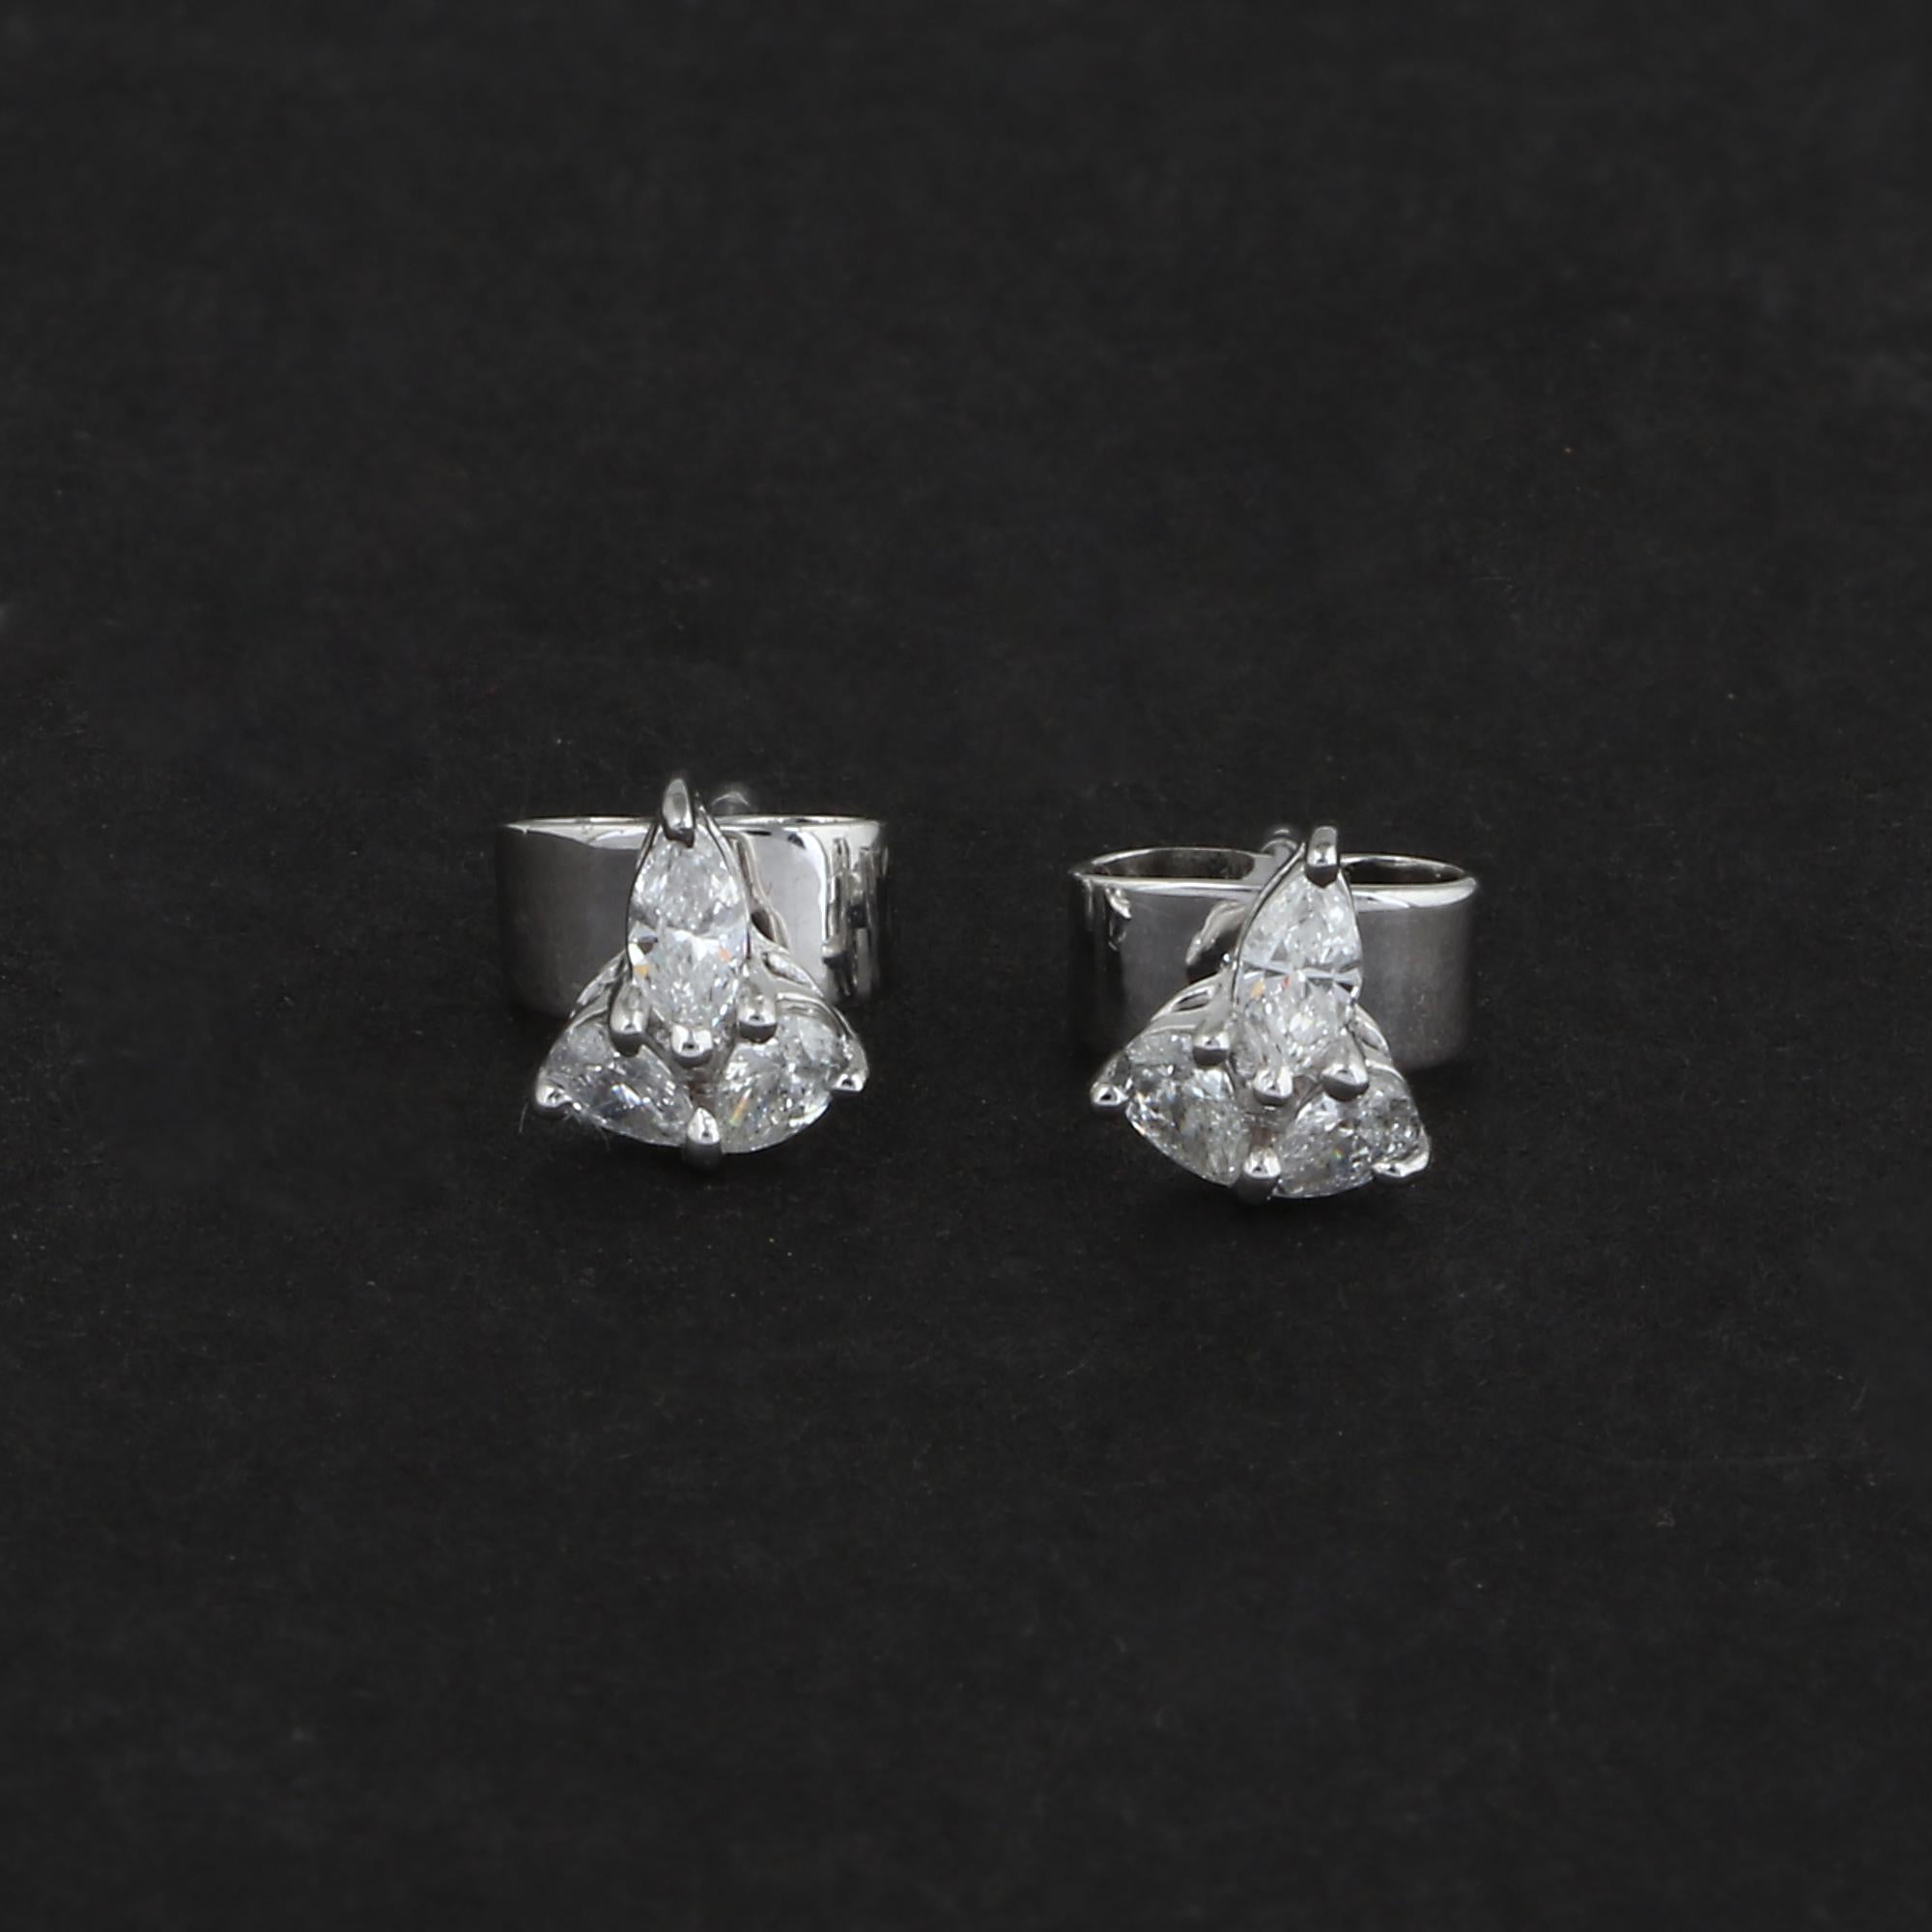 0.3 ct diamond earrings